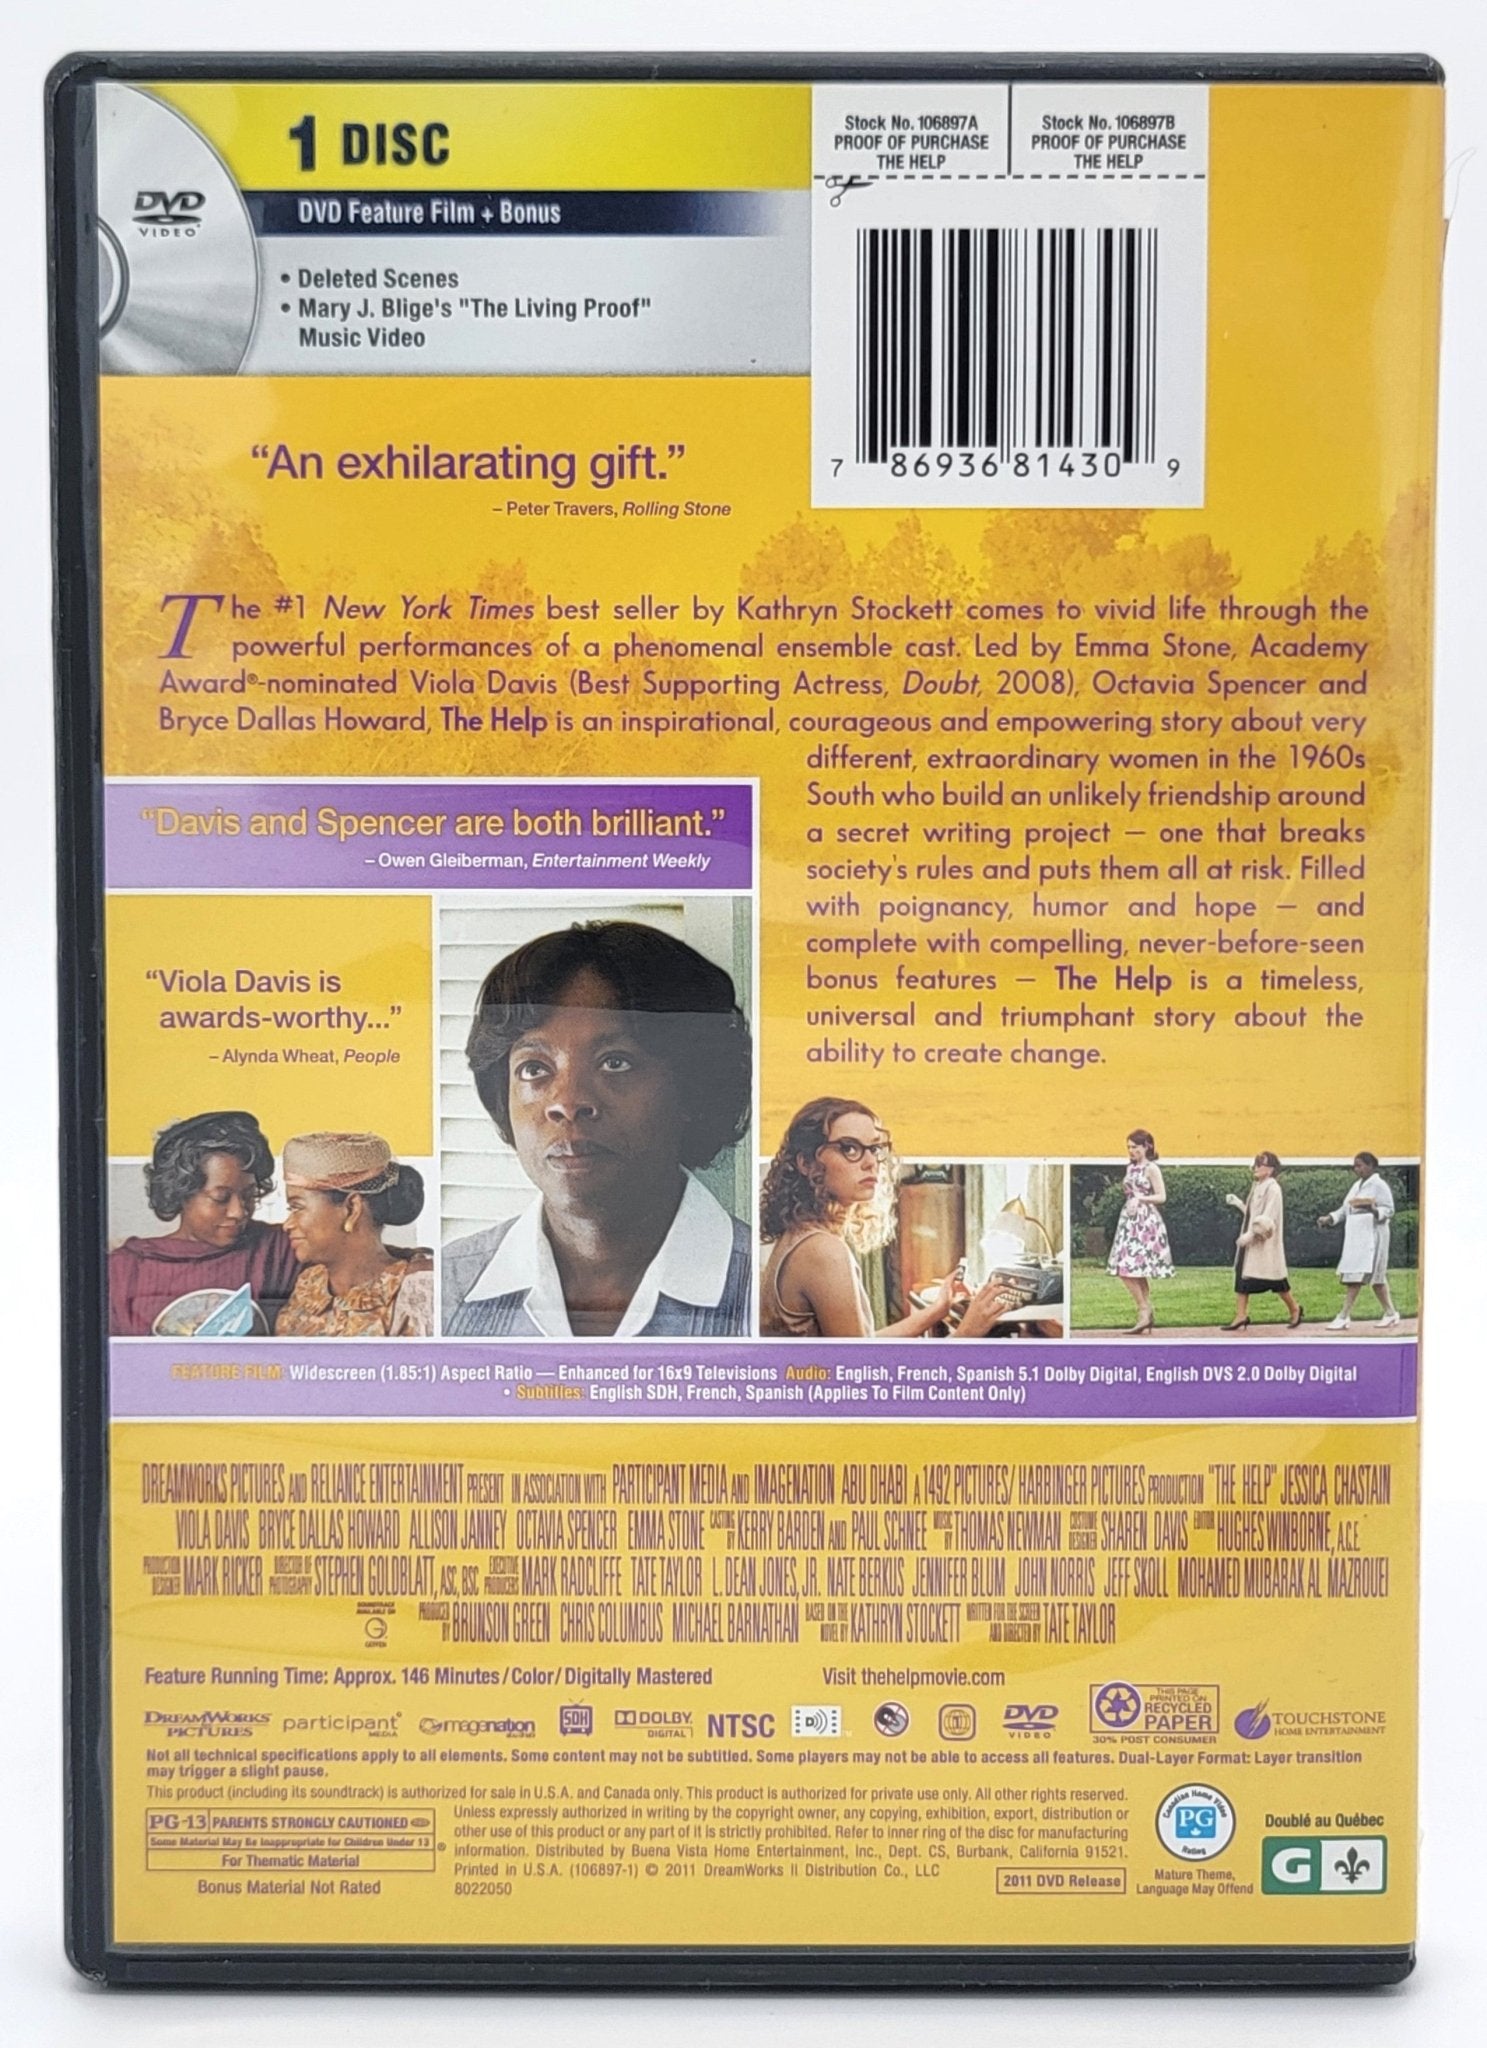 Dream Works - The Help | DVD | Widescreen - DVD - Steady Bunny Shop